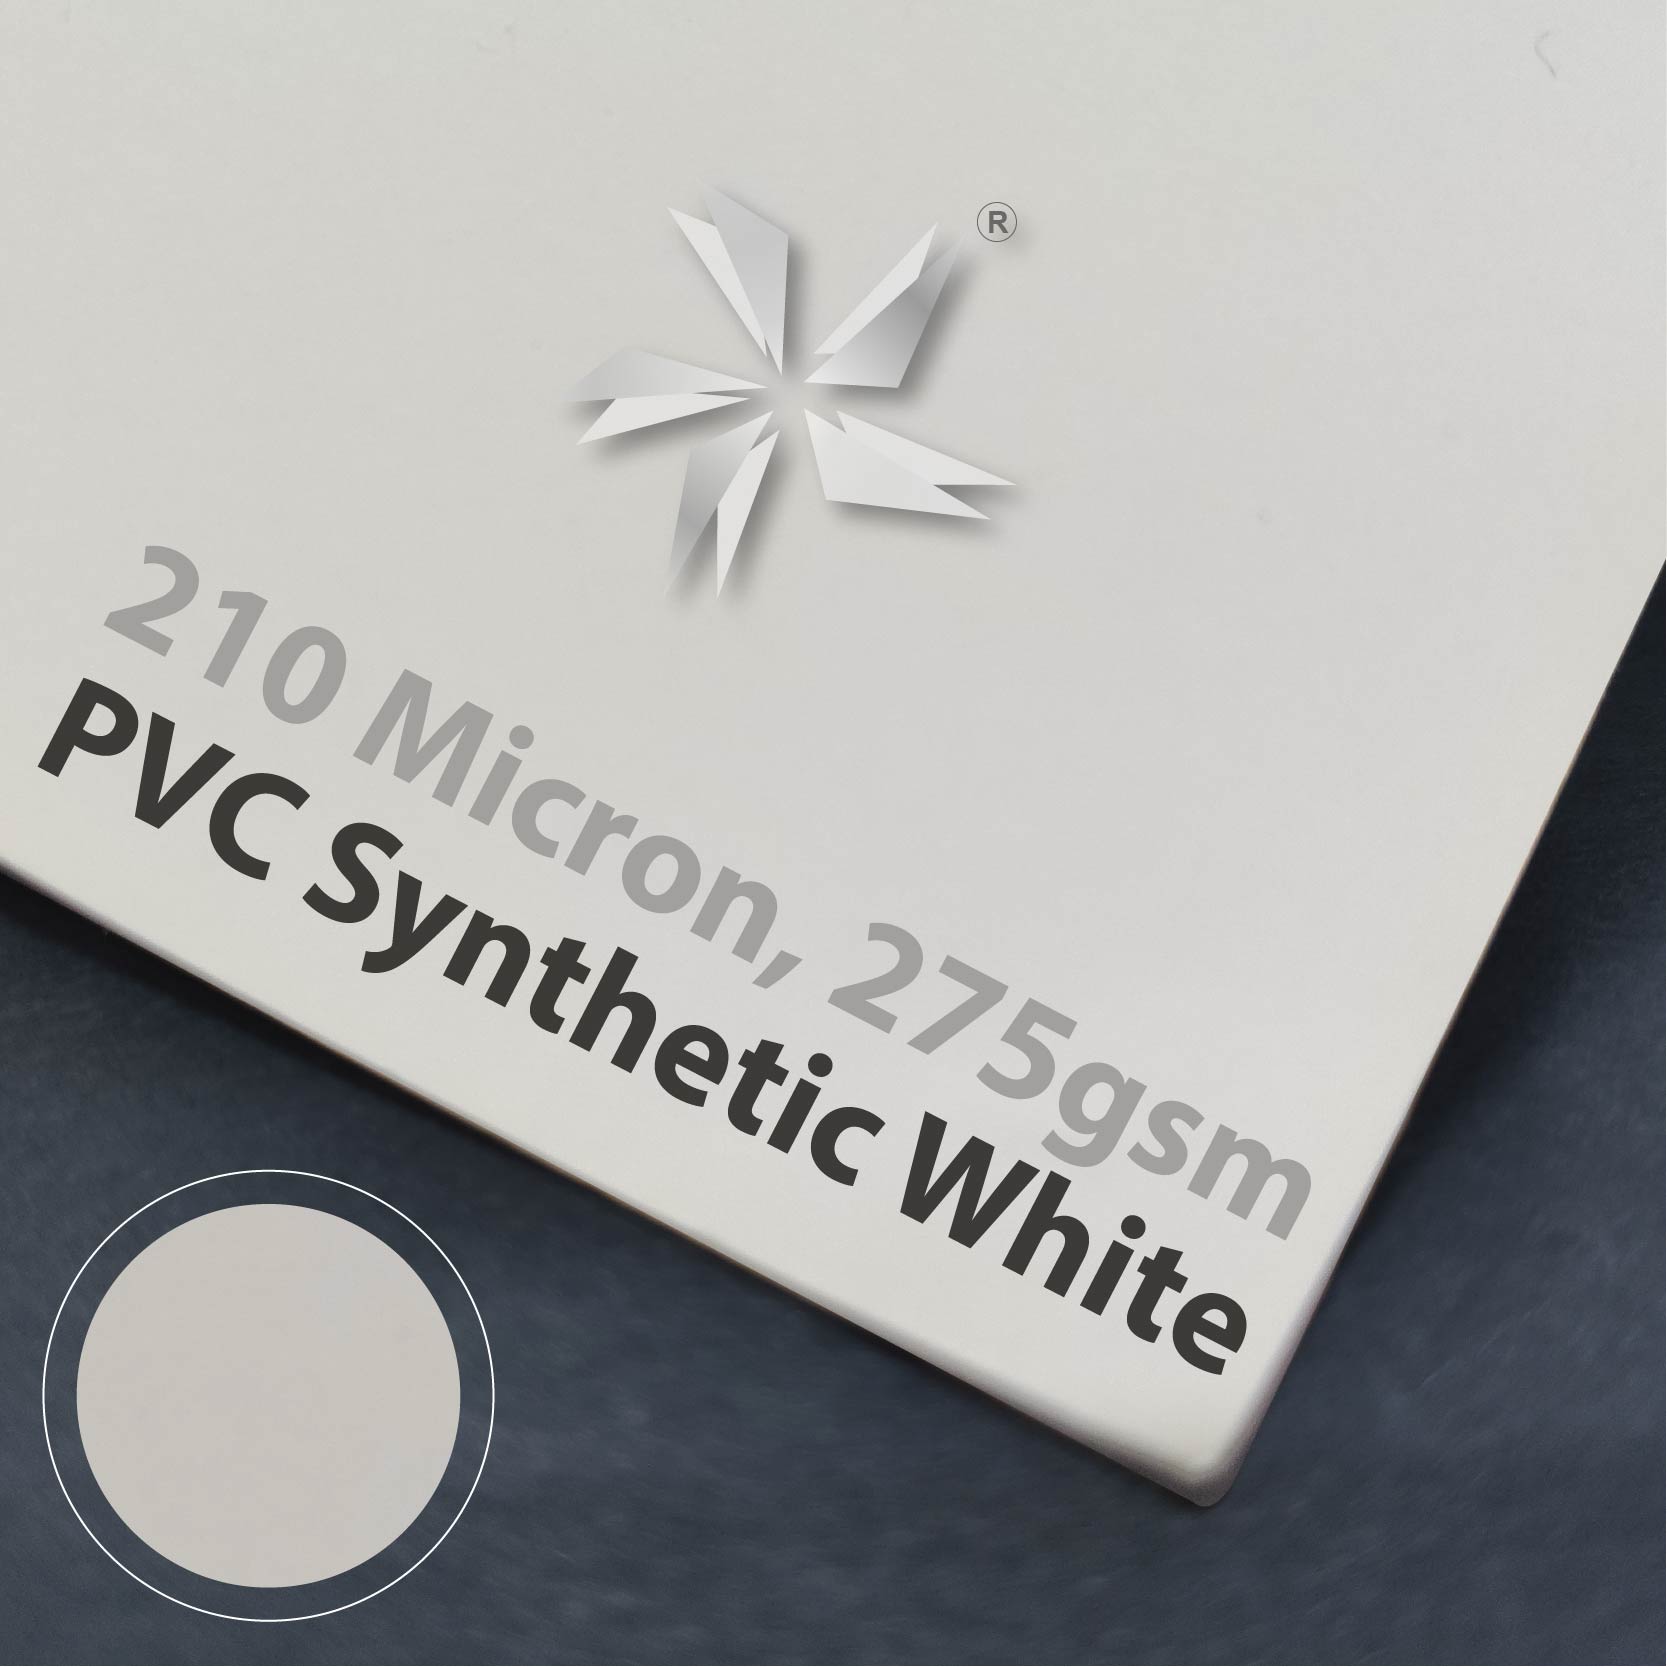 PVC Synthetic White 210 Micron - 275gsm